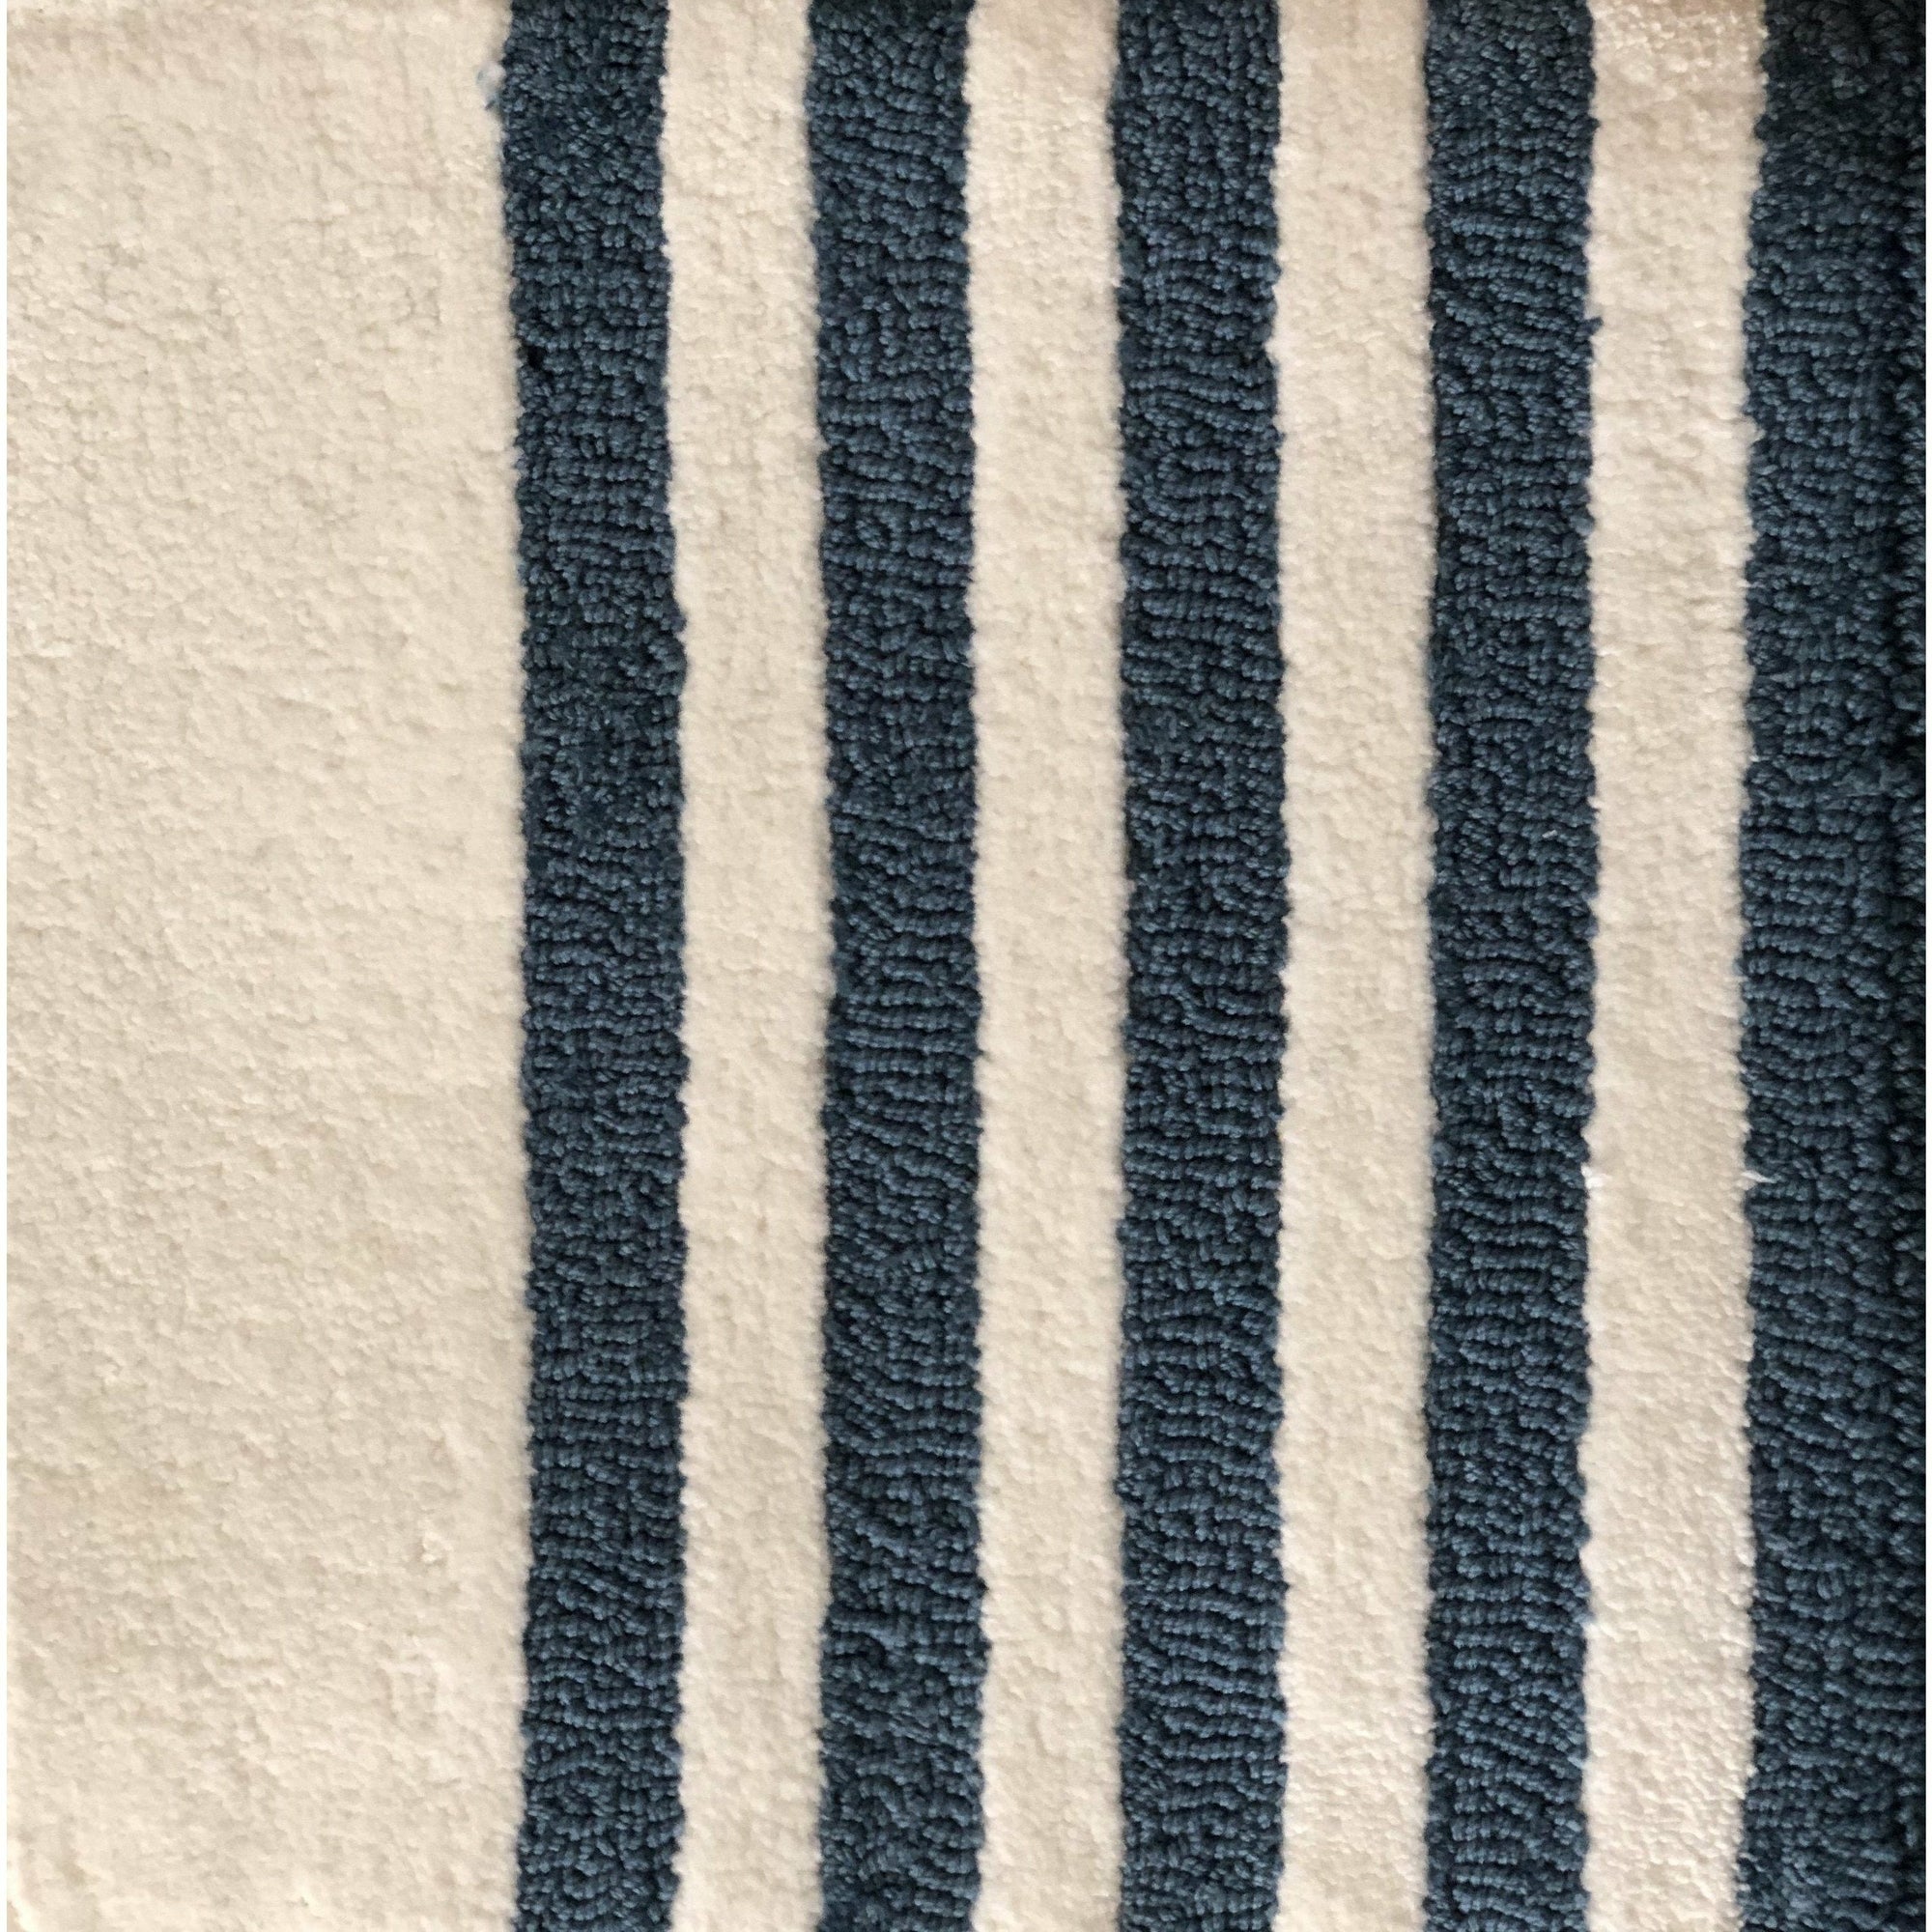 Sailor Stripe 12" x 12" Sample samples Organic Weave Shop 